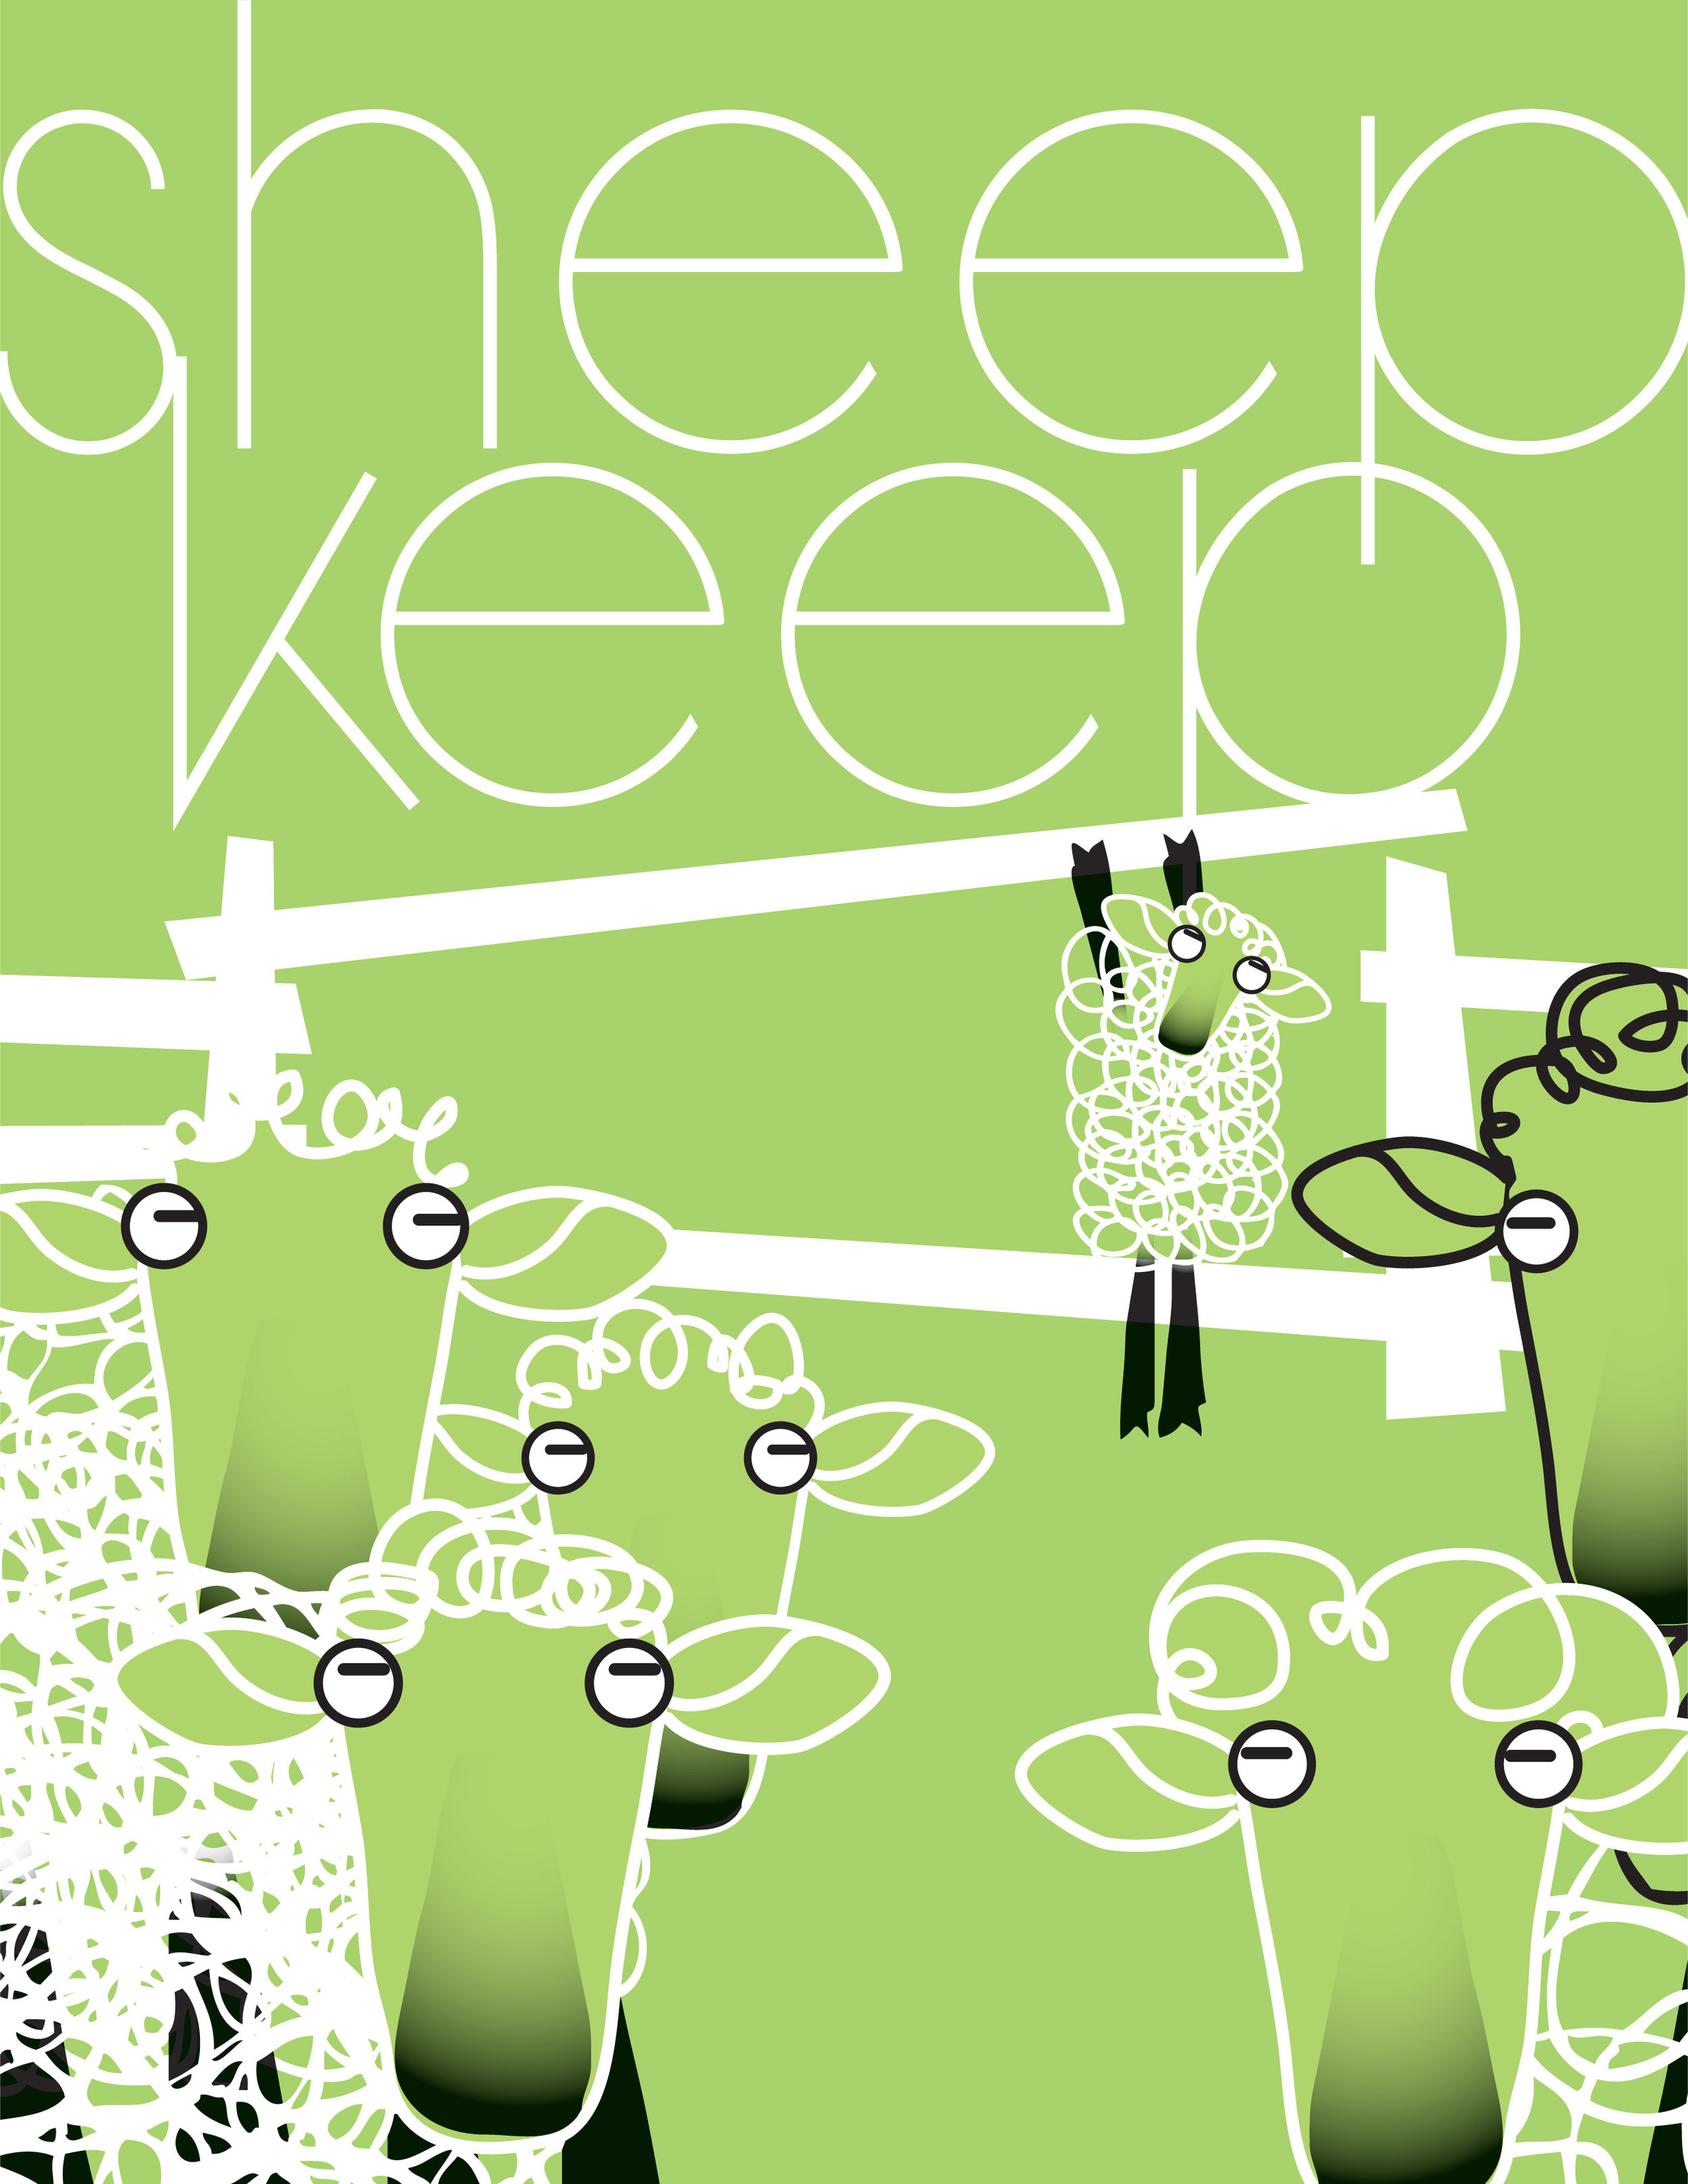 Sheep Sleep Book 2-13.jpg